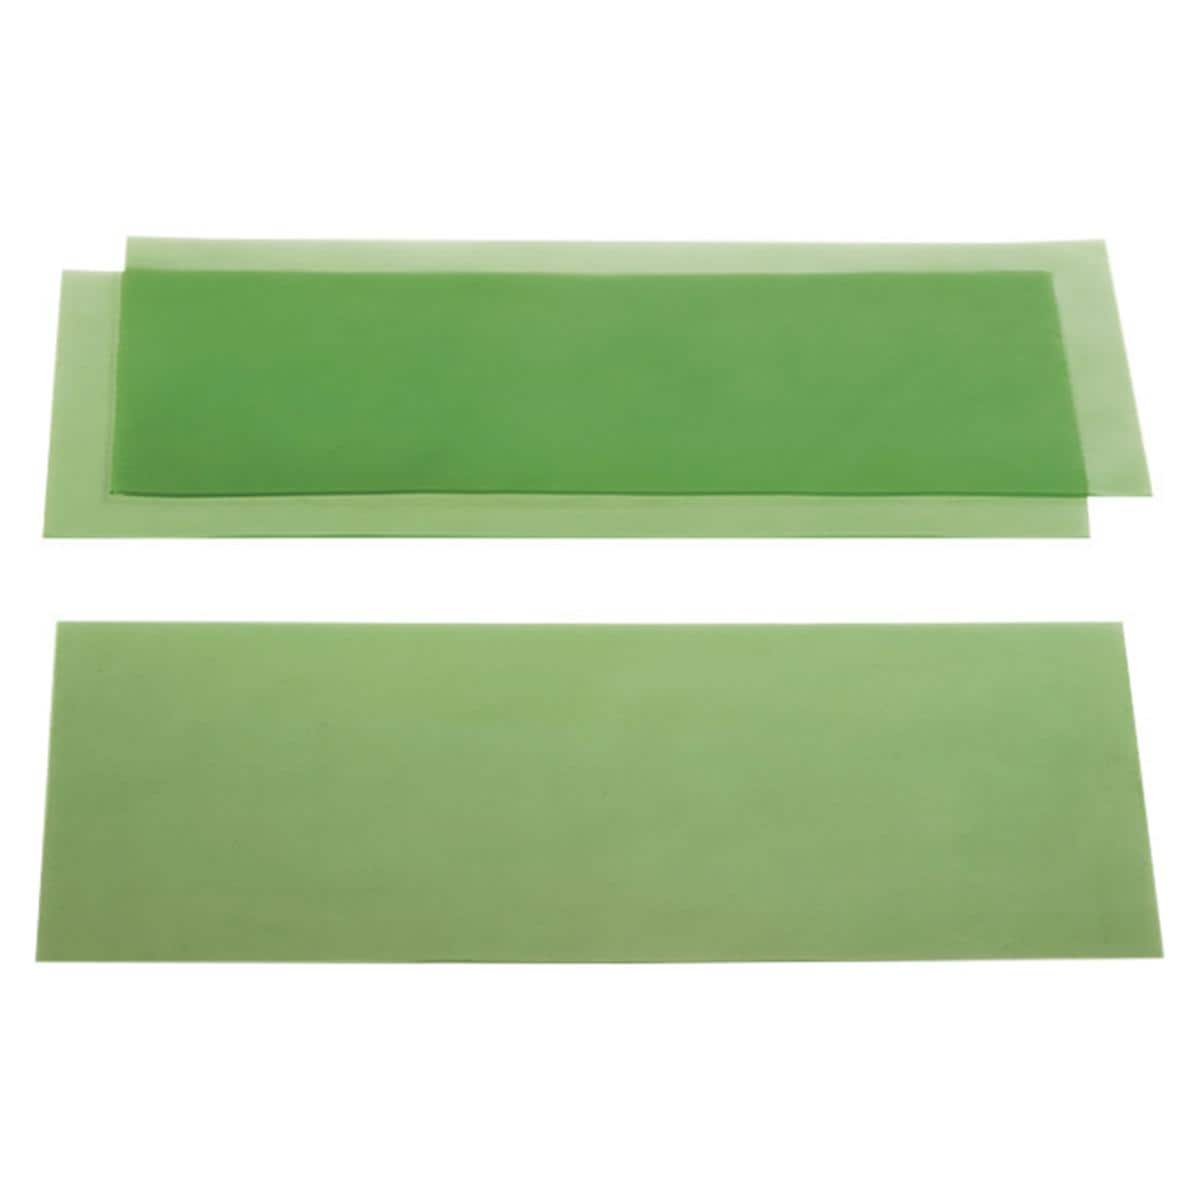 Glattes Gusswachs, grün - Stärke 0,40 mm, Packung 15 Platten